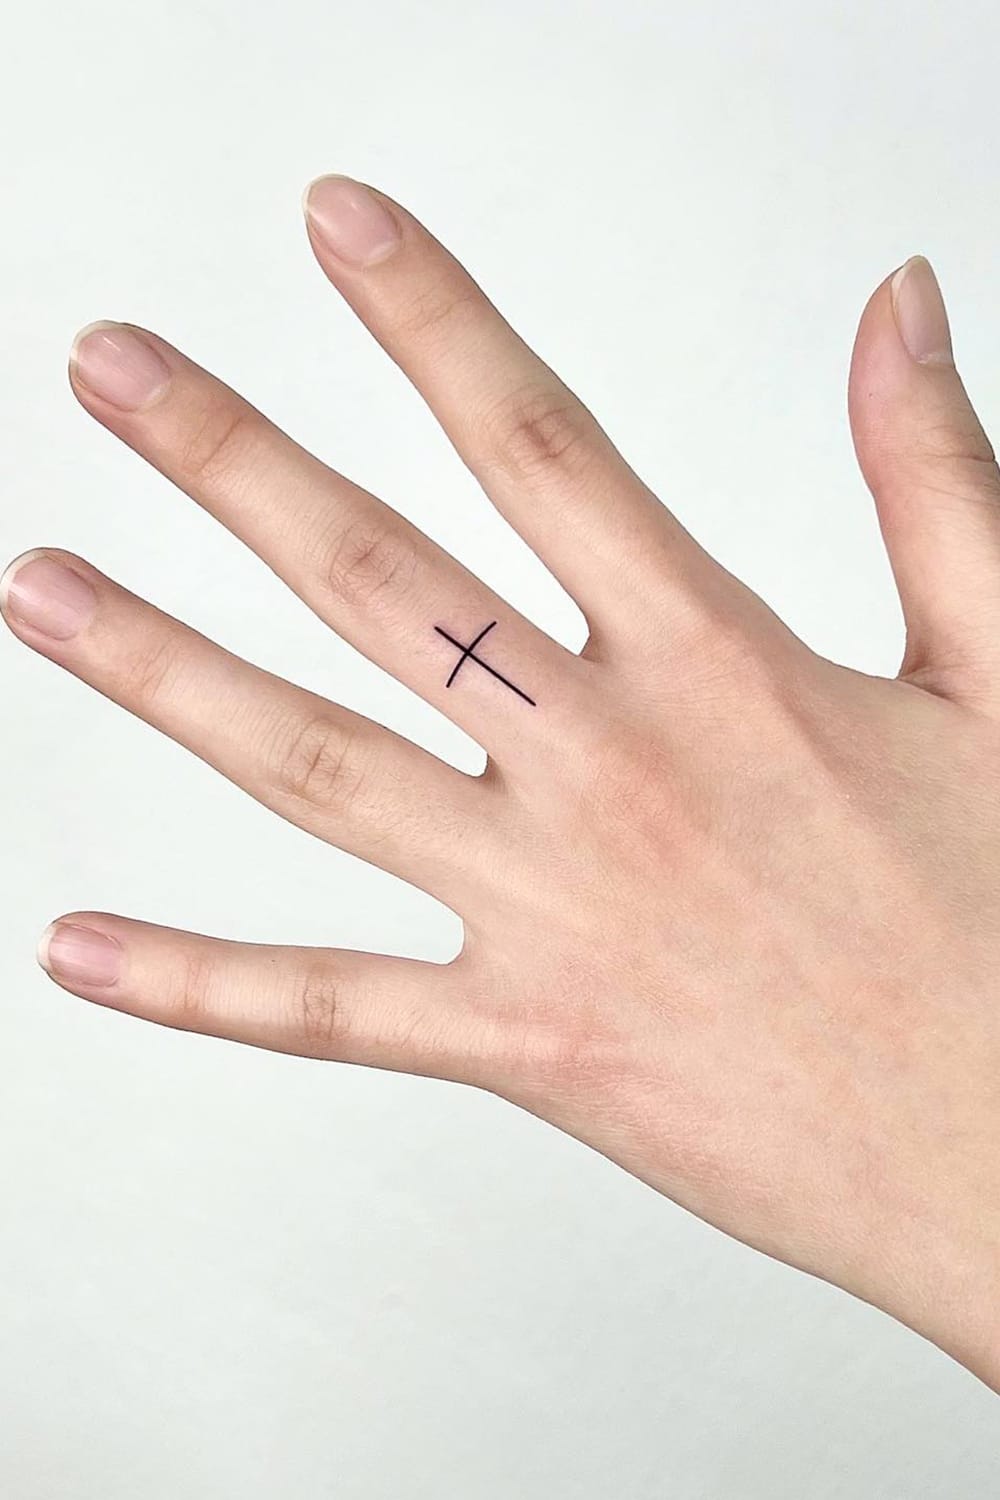 Small cross tattoo on finger